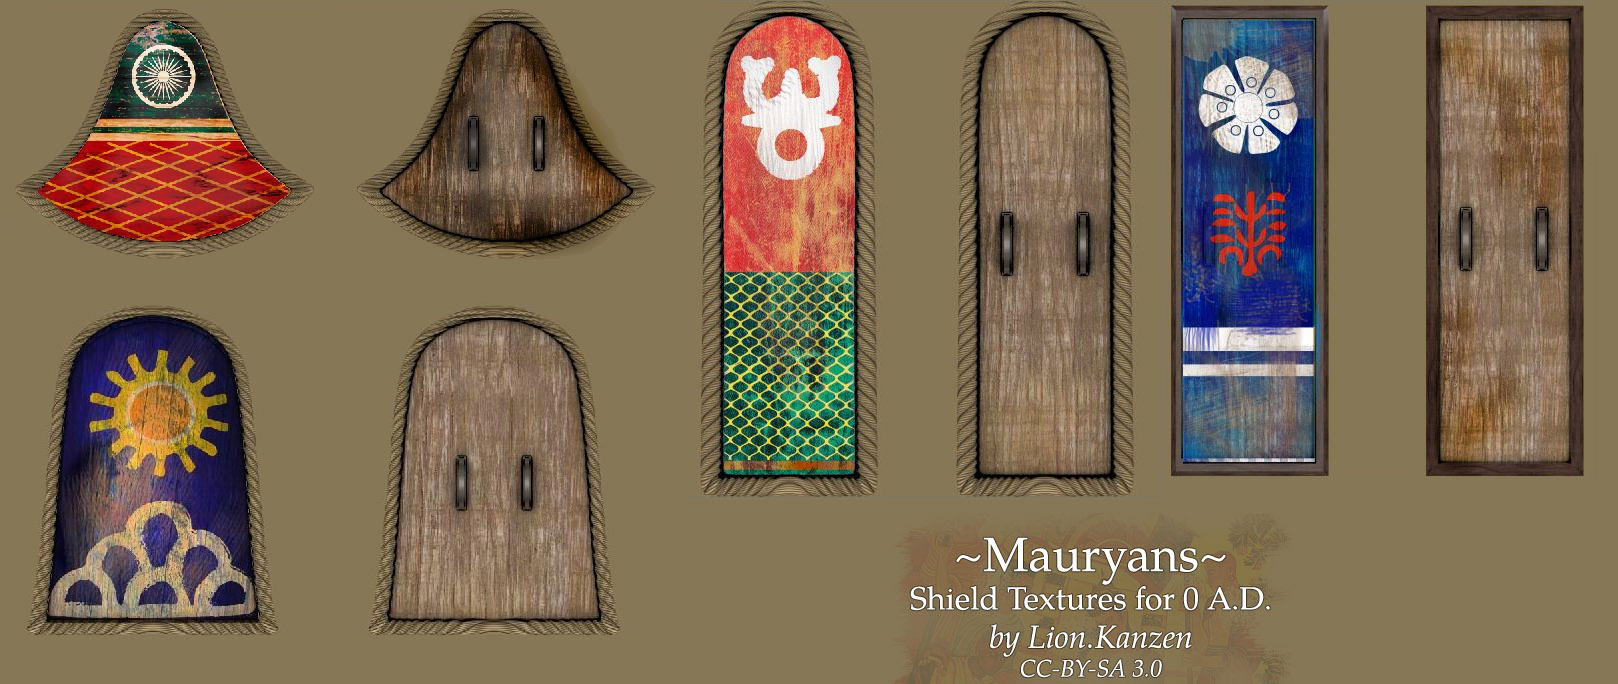 mauryan-shields-01.jpg